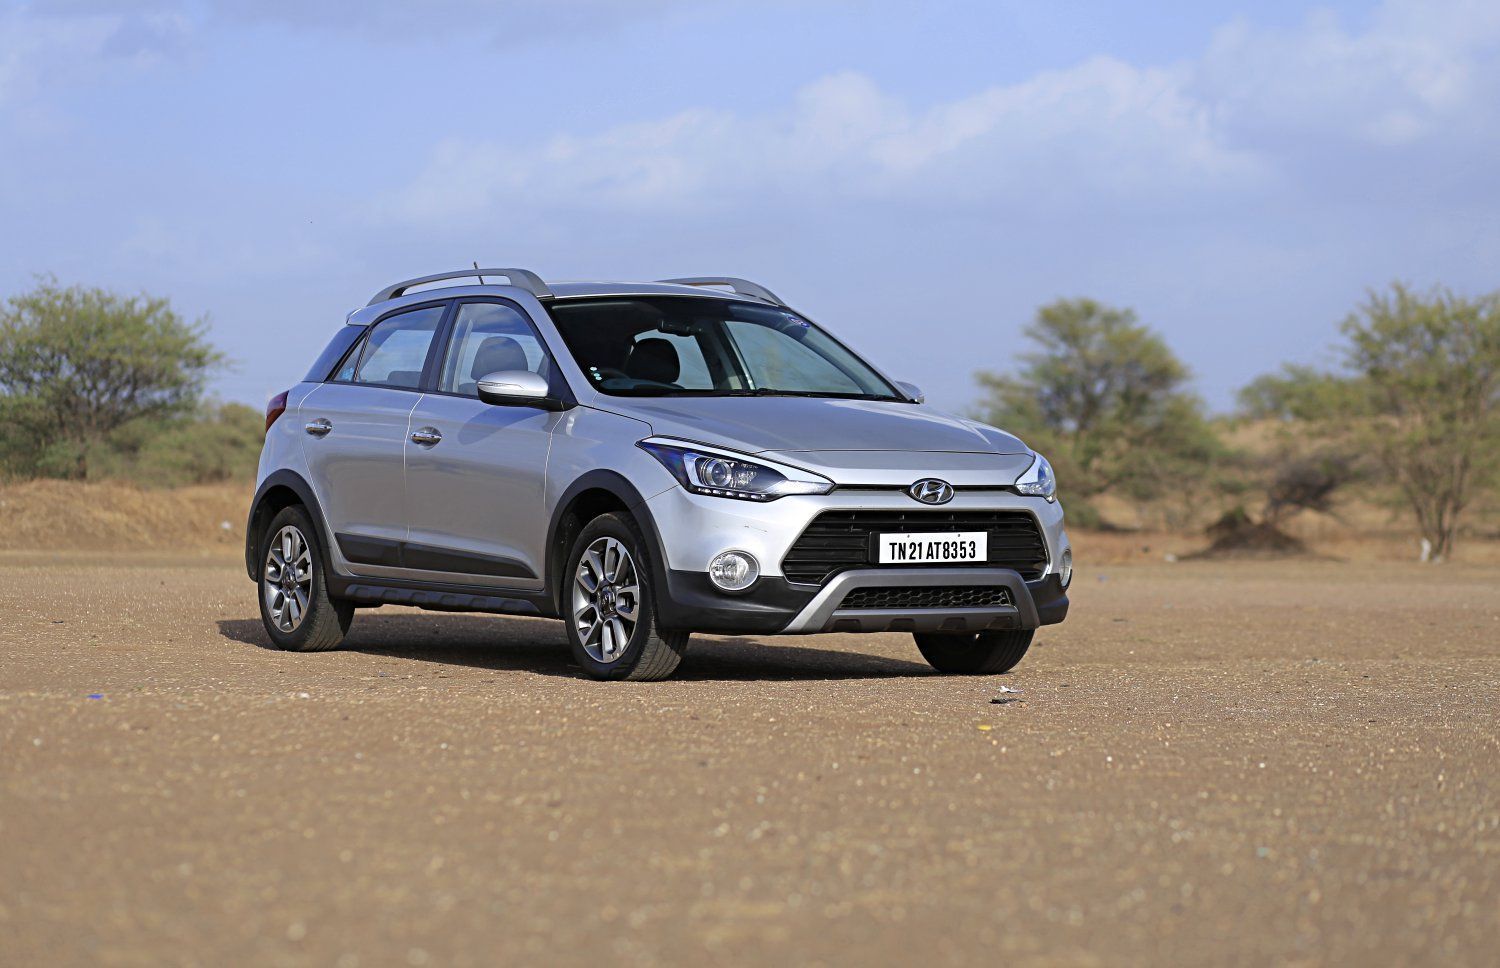 Hyundai i20 Active Price, Images, Mileage, Reviews, Specs